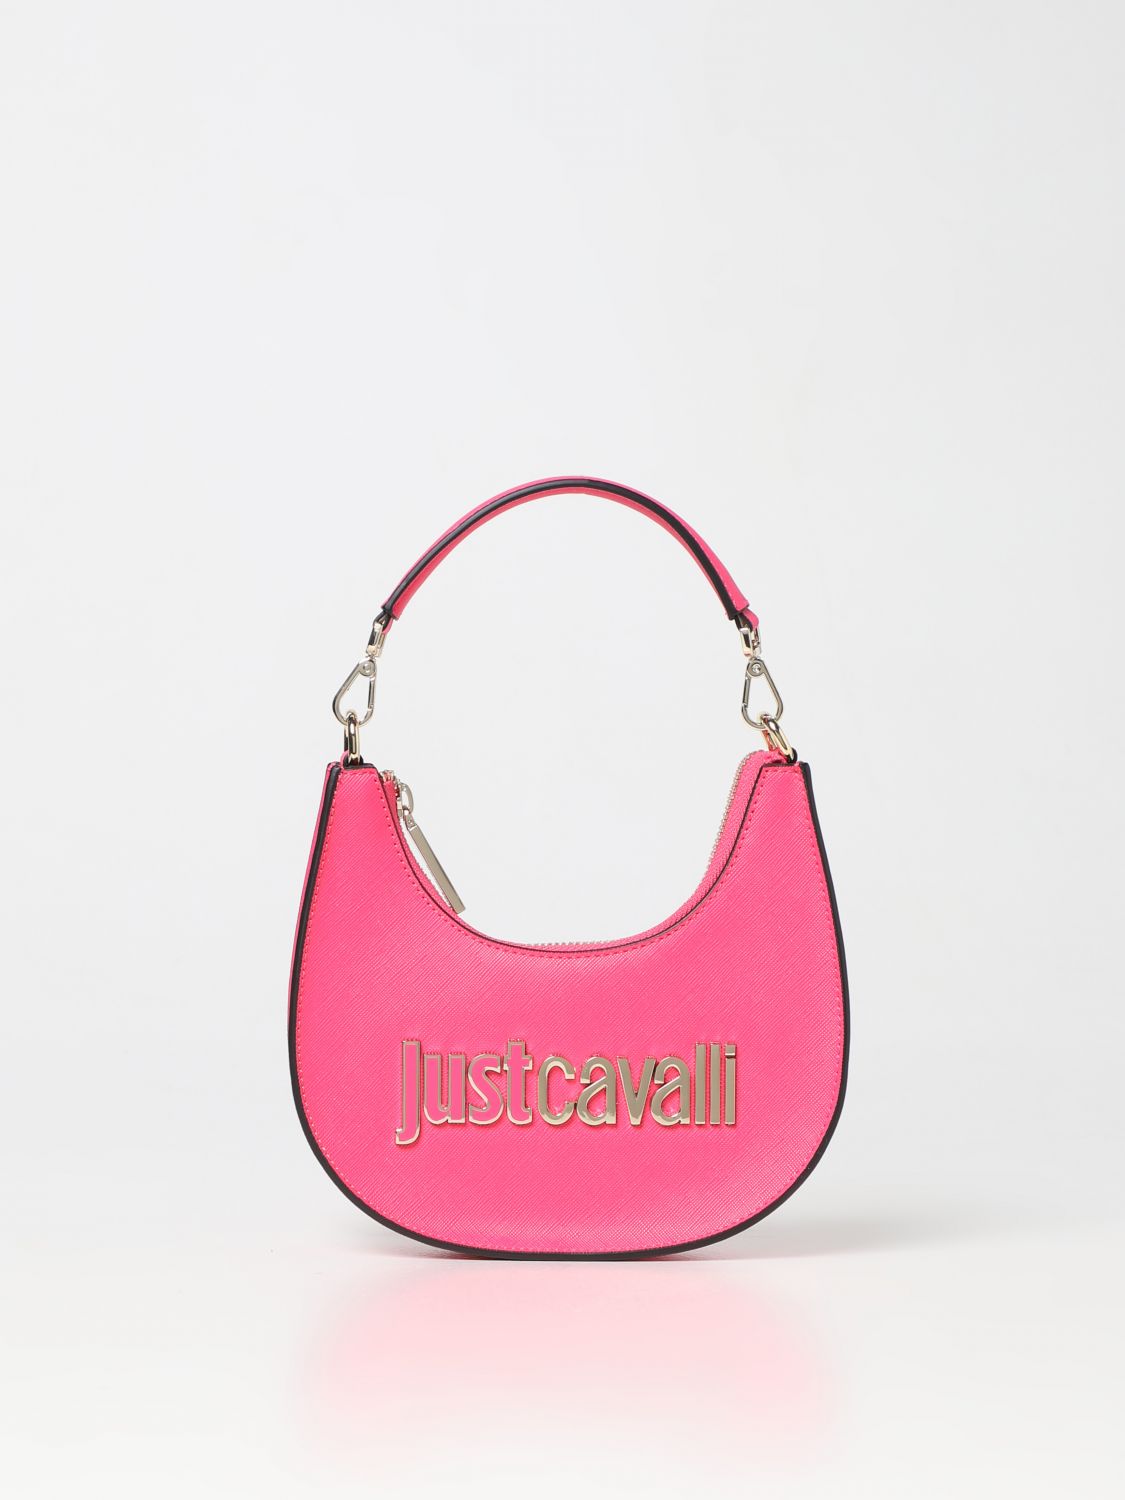 Roberto Cavalli Bags & Handbags - Men - 54 products | FASHIOLA.co.uk